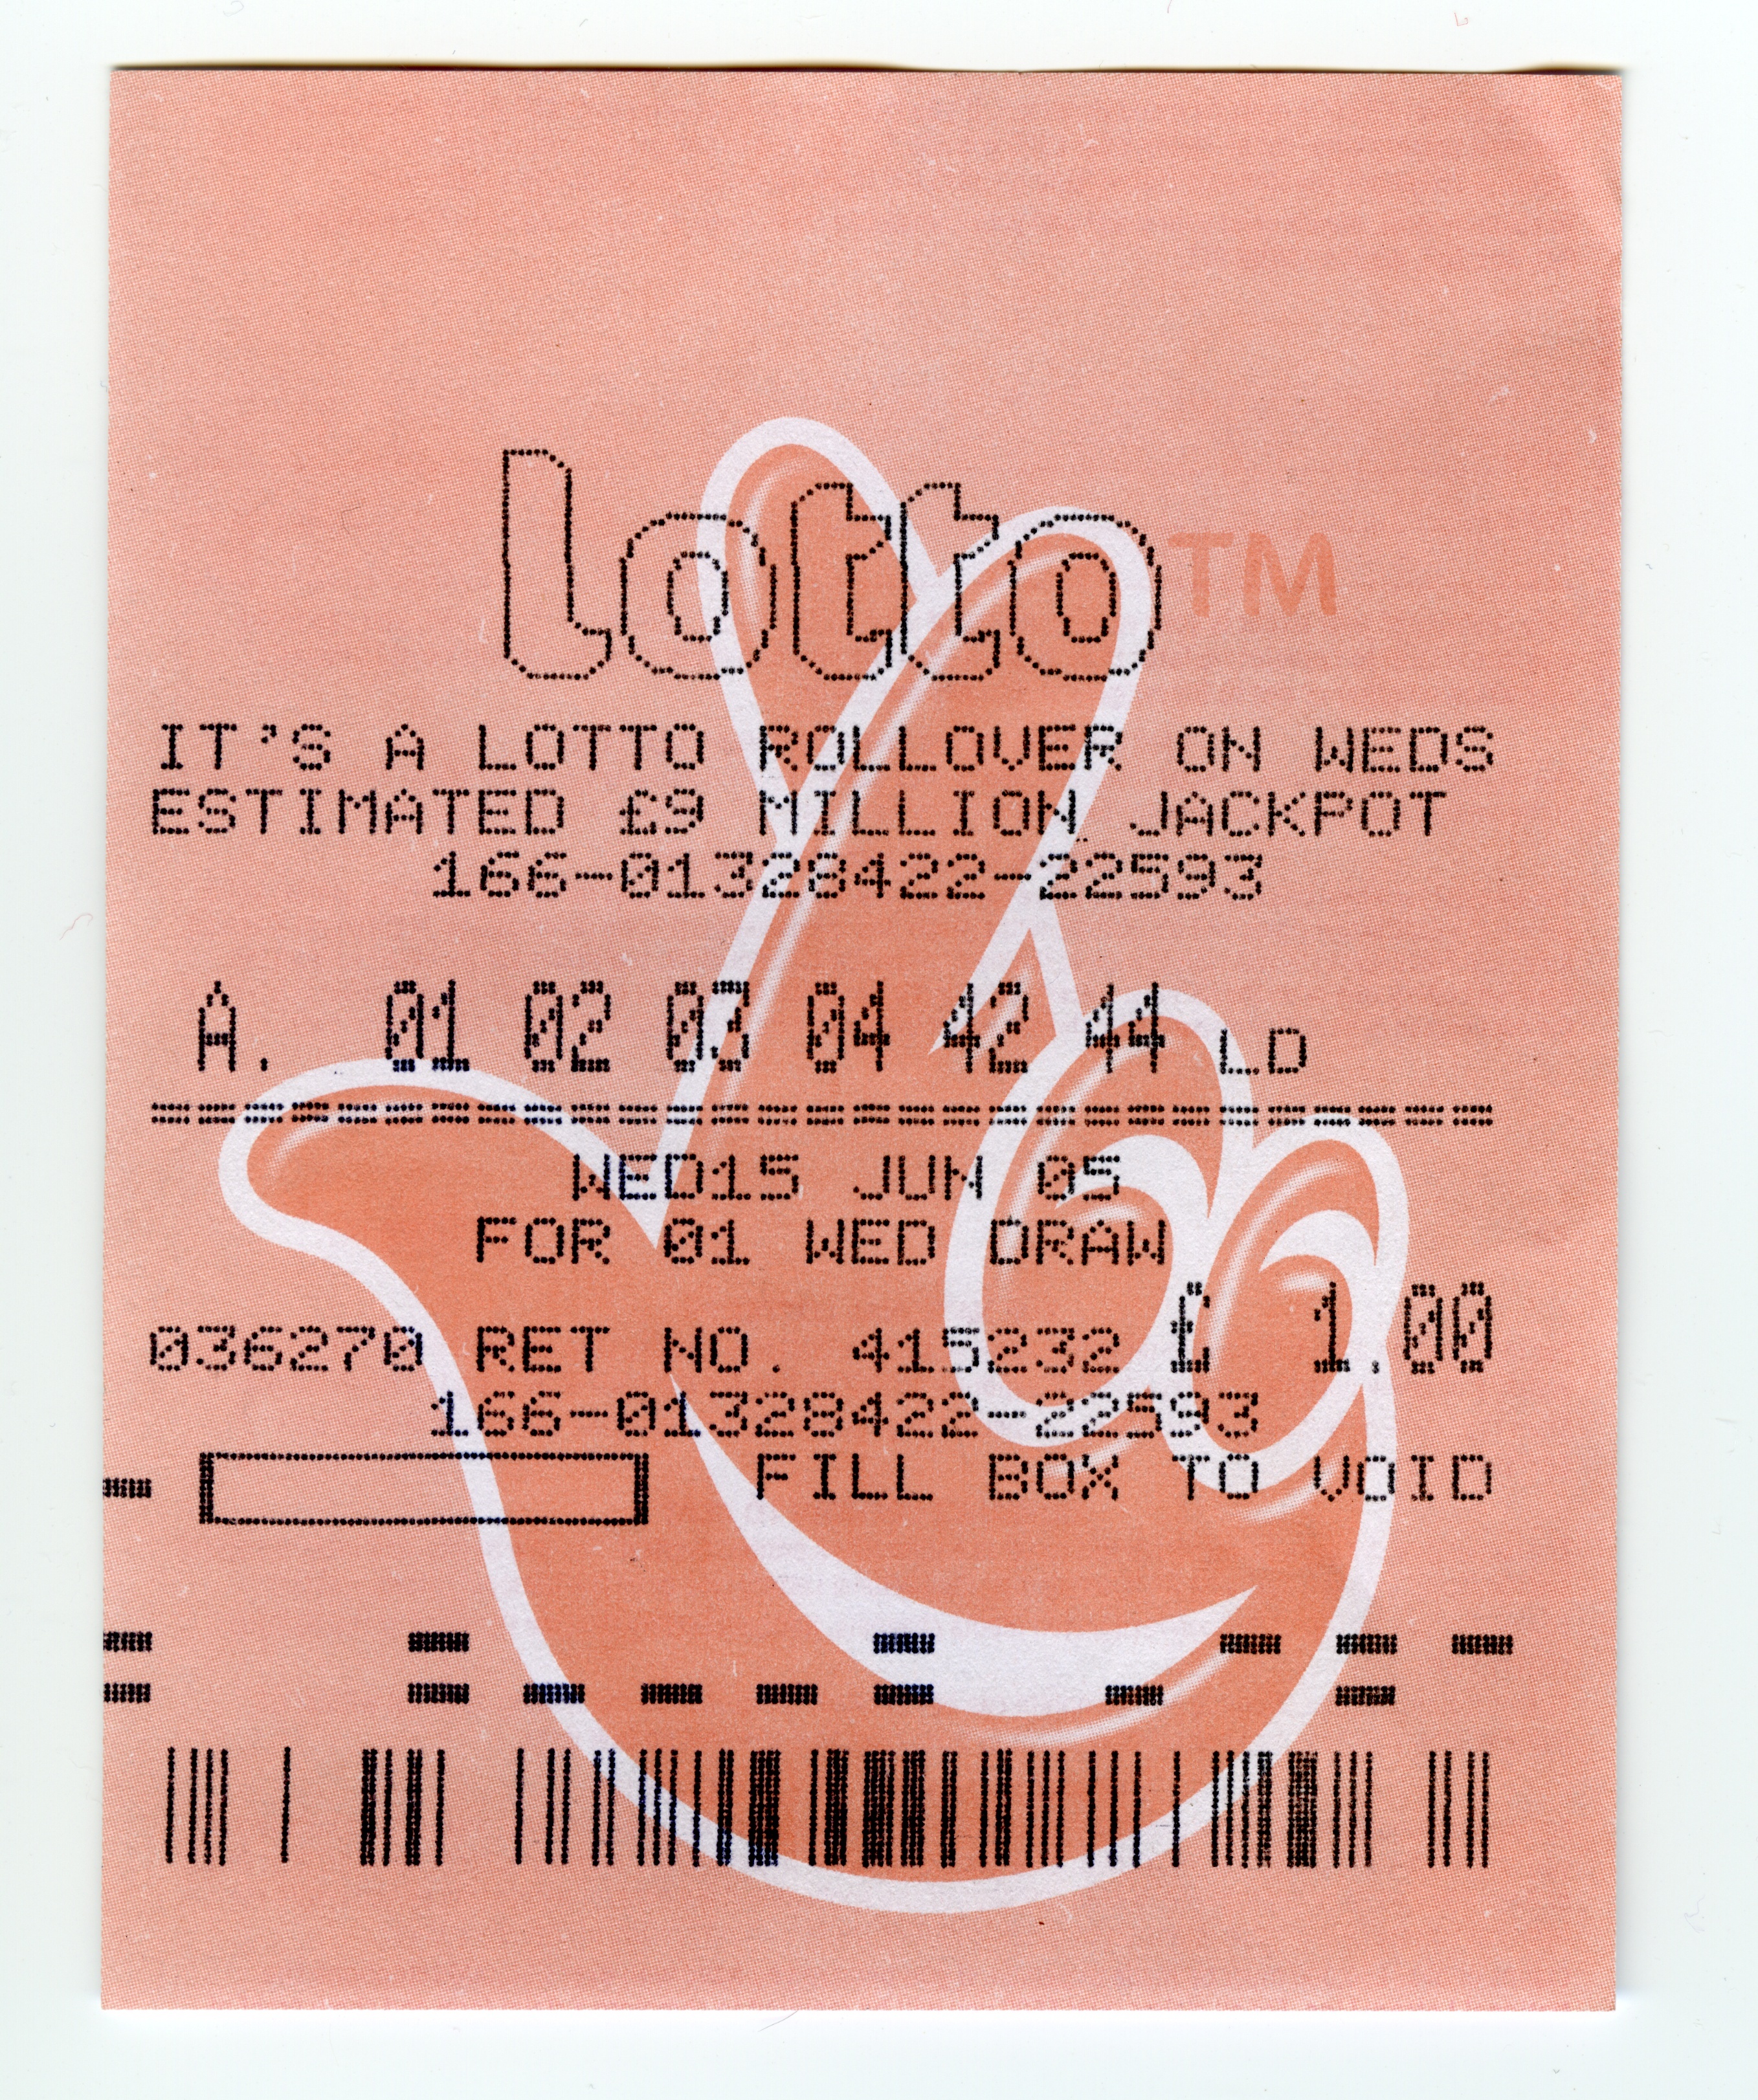 the lotto ticket check